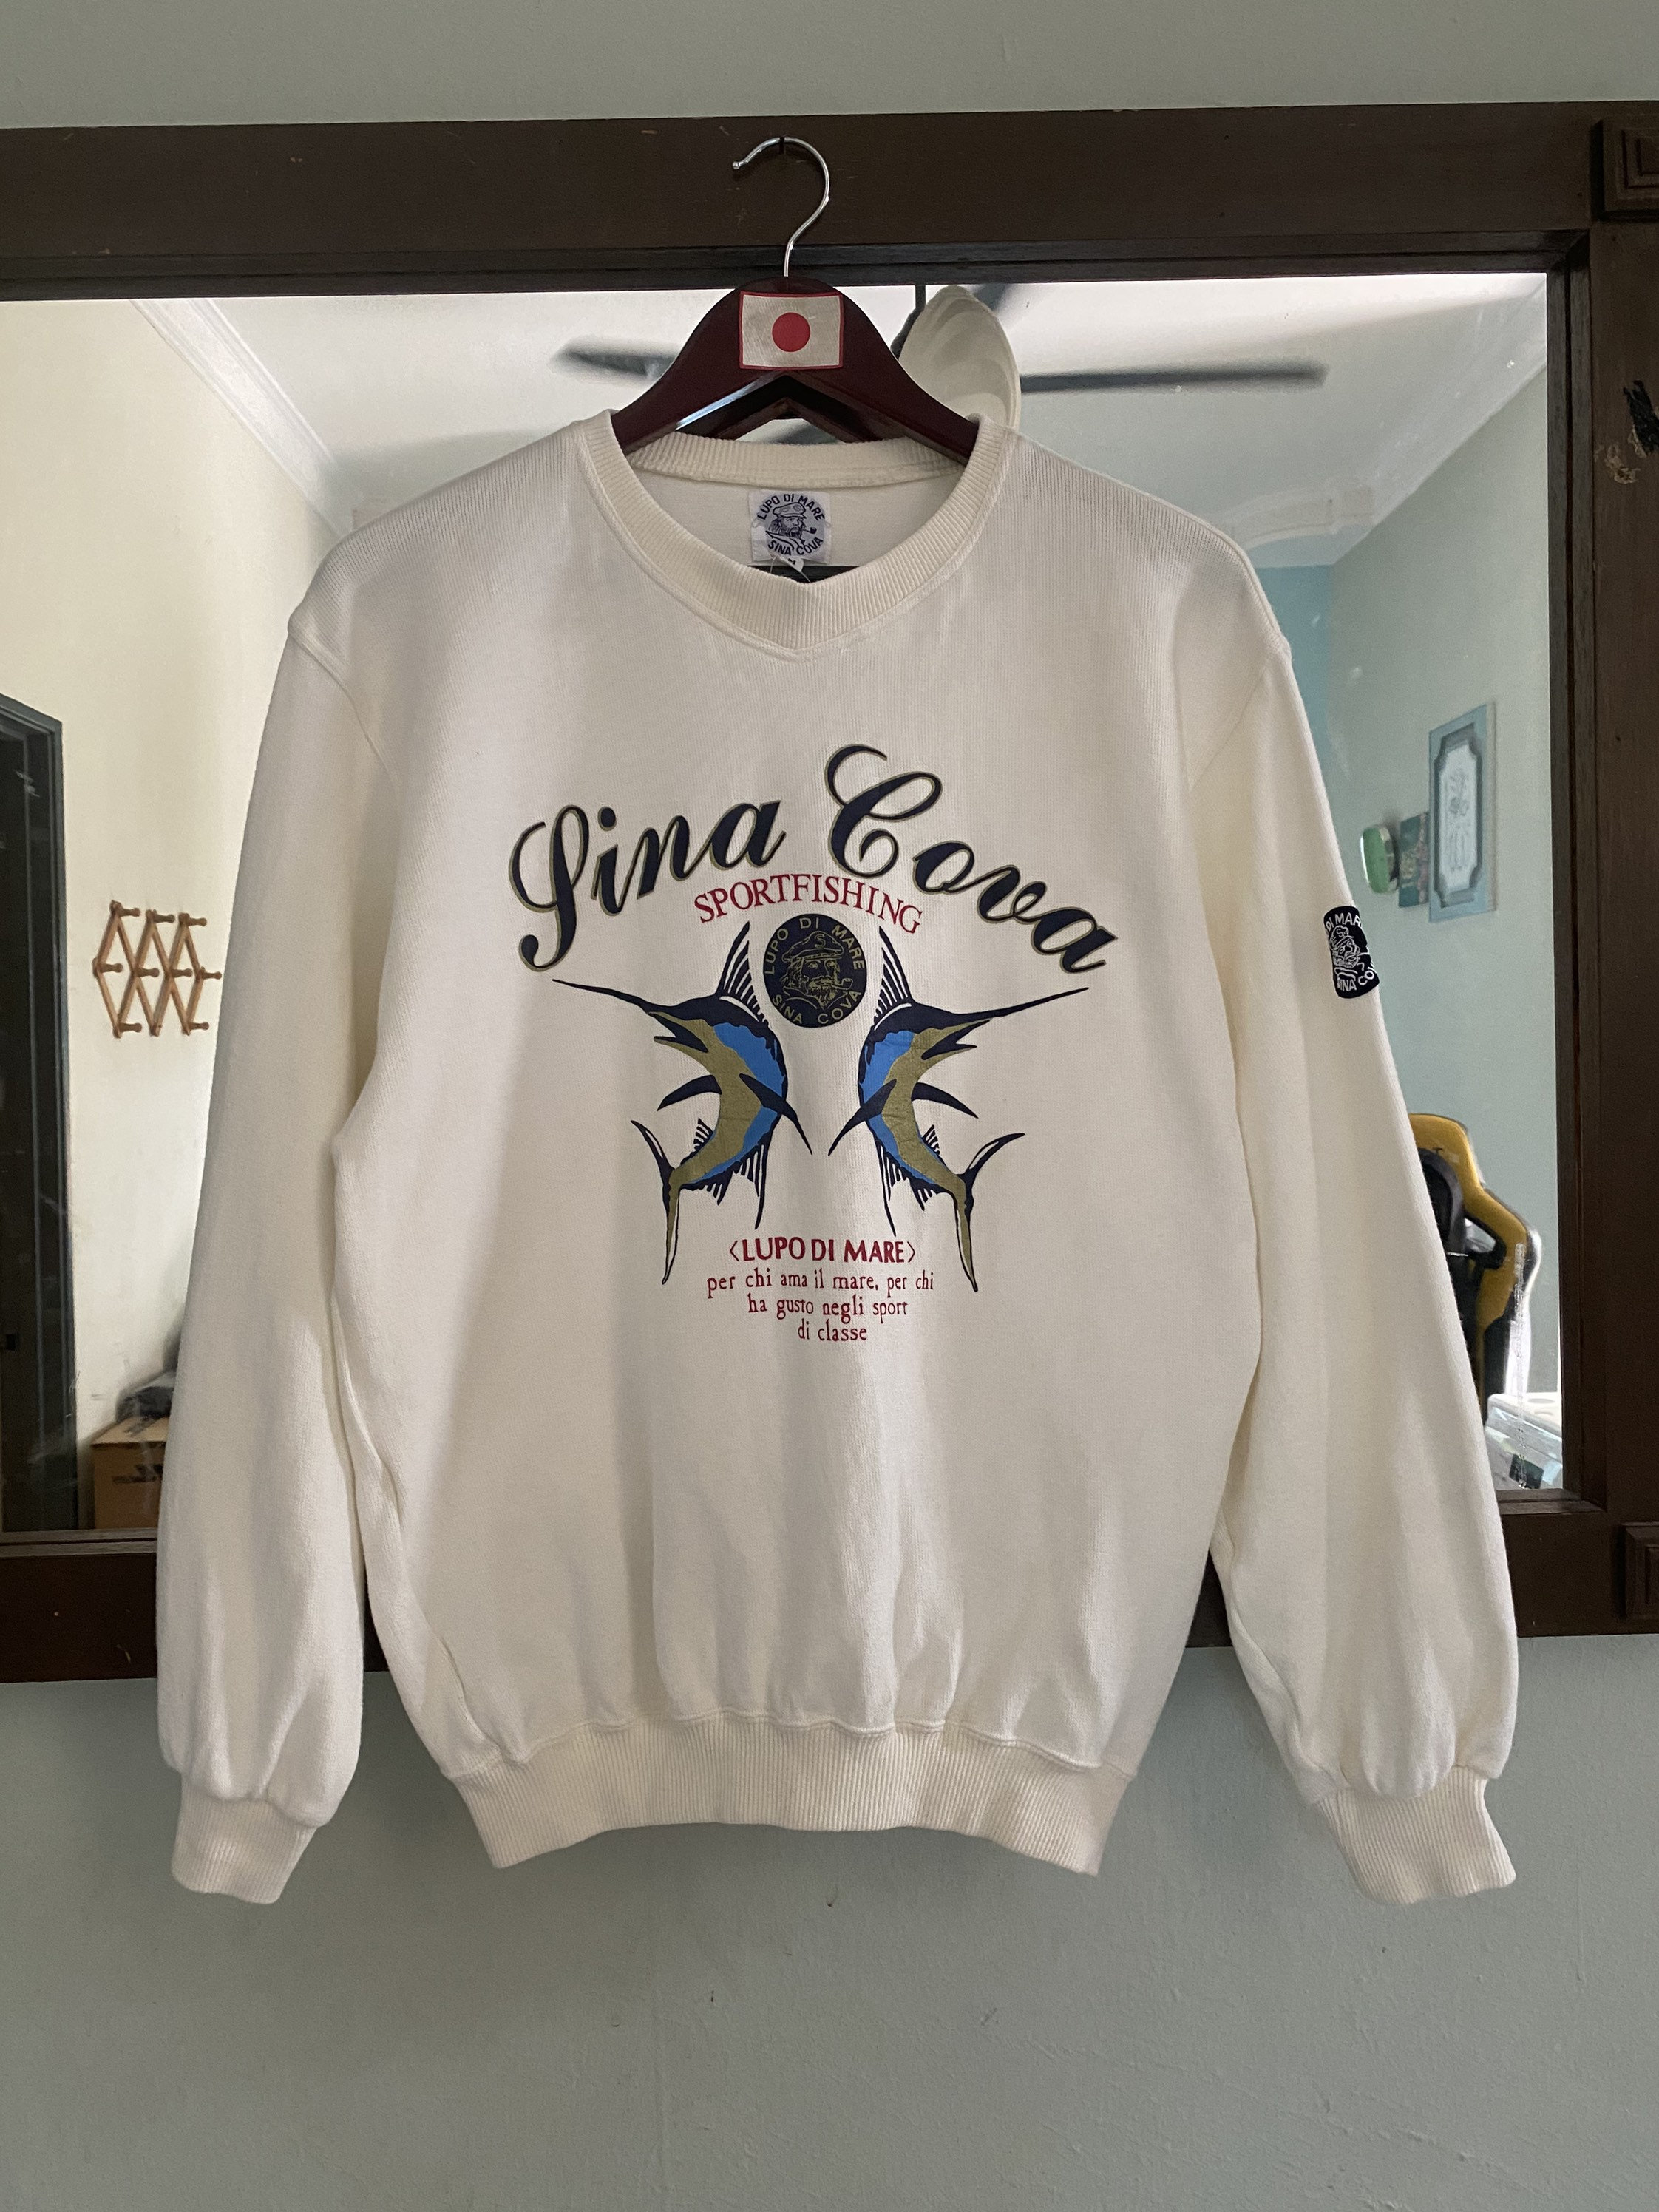 Vintage Lupo Di Mare Sina Cova Sportfishing Sweatshirt Medium Size